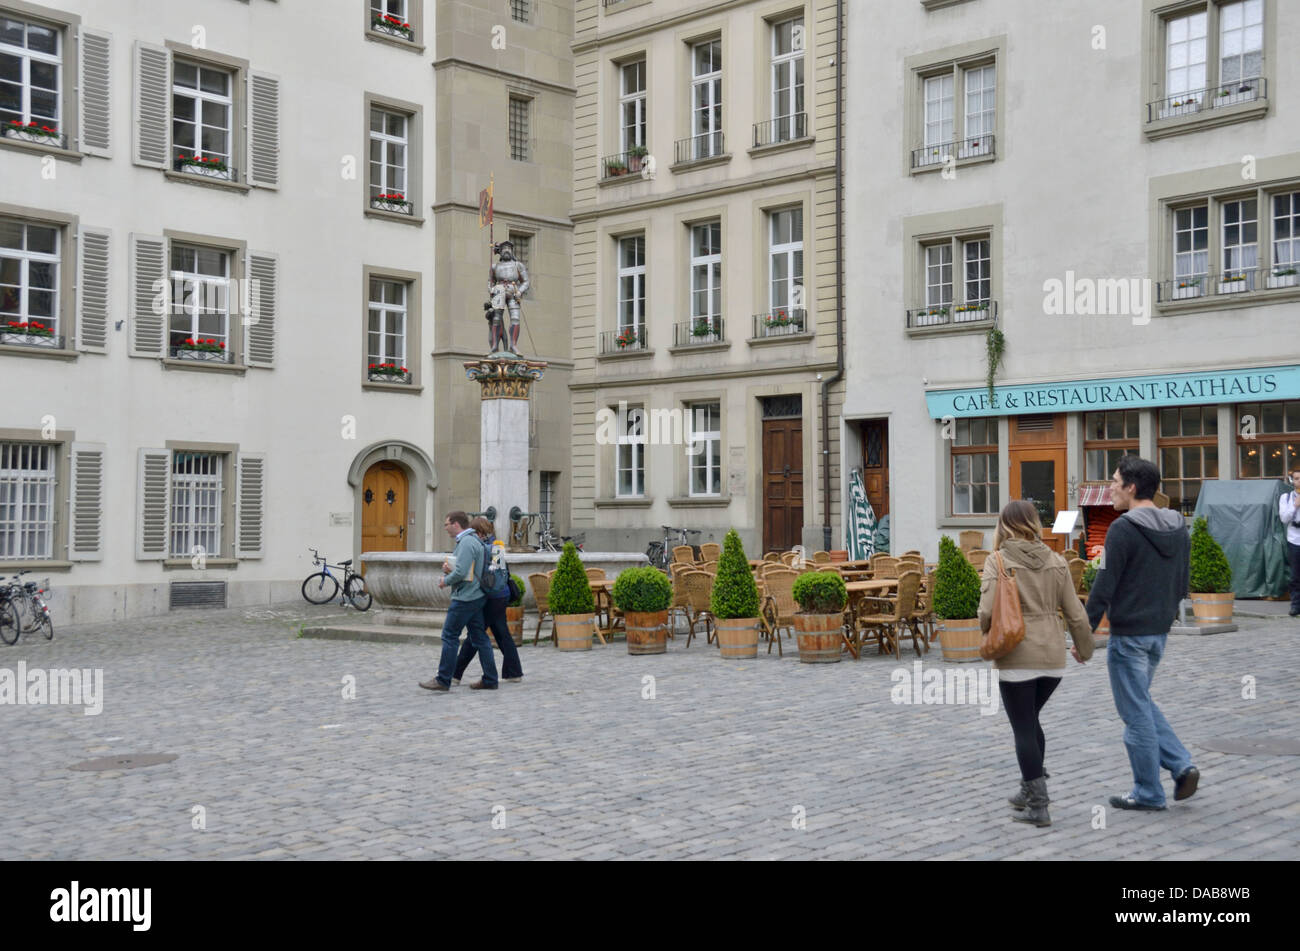 Rathausplatz, Bern, Switzerland Stock Photo